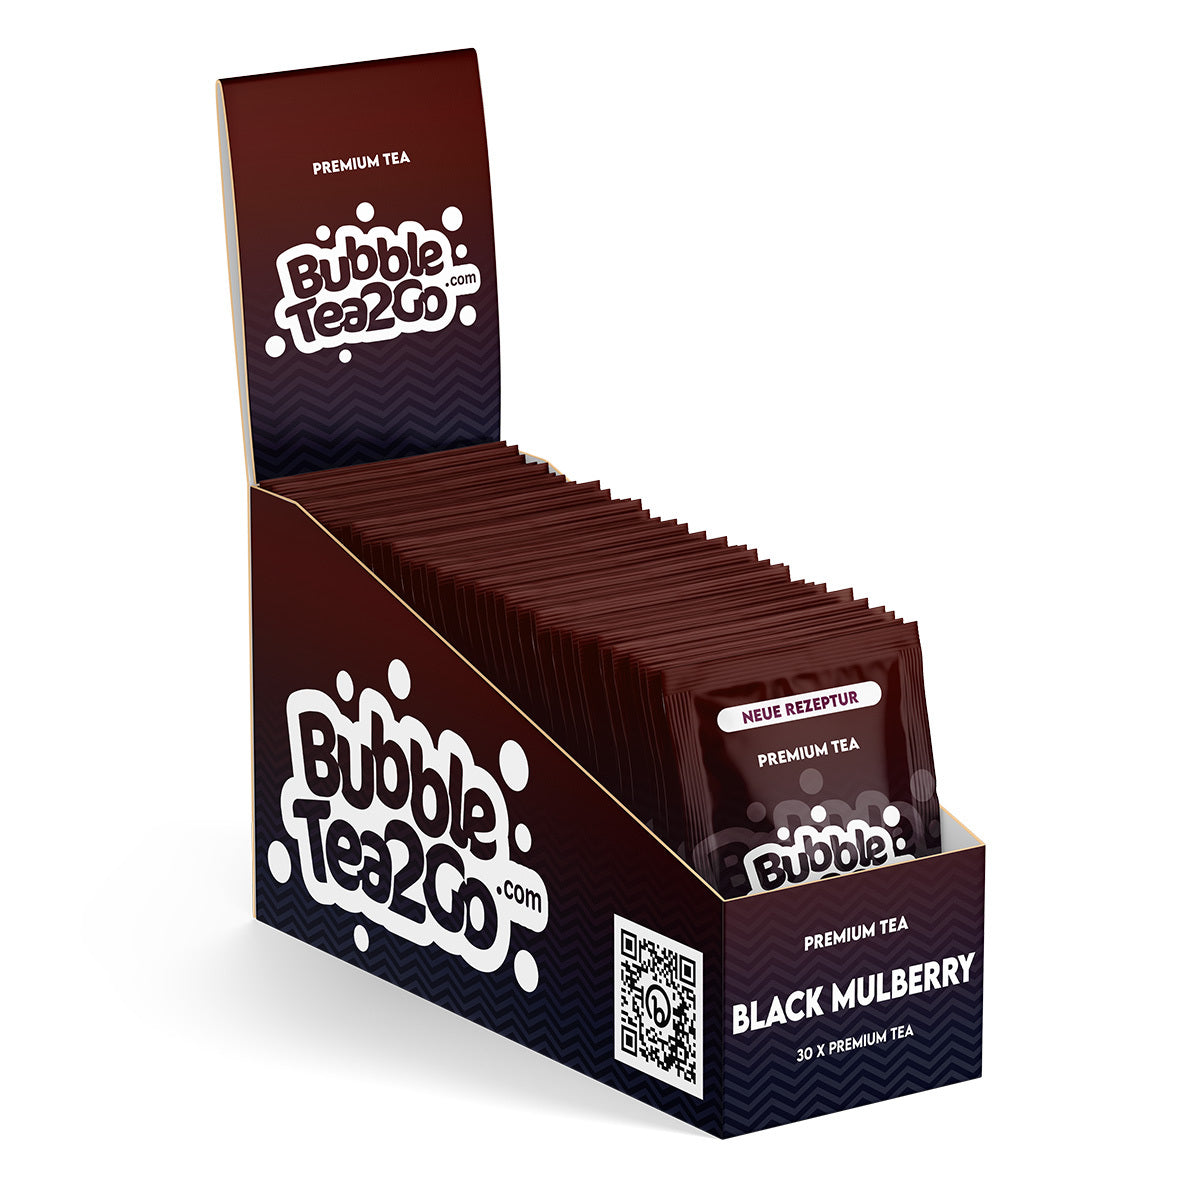 Premium tea advantage box - Black Mulberry (30 pcs.)